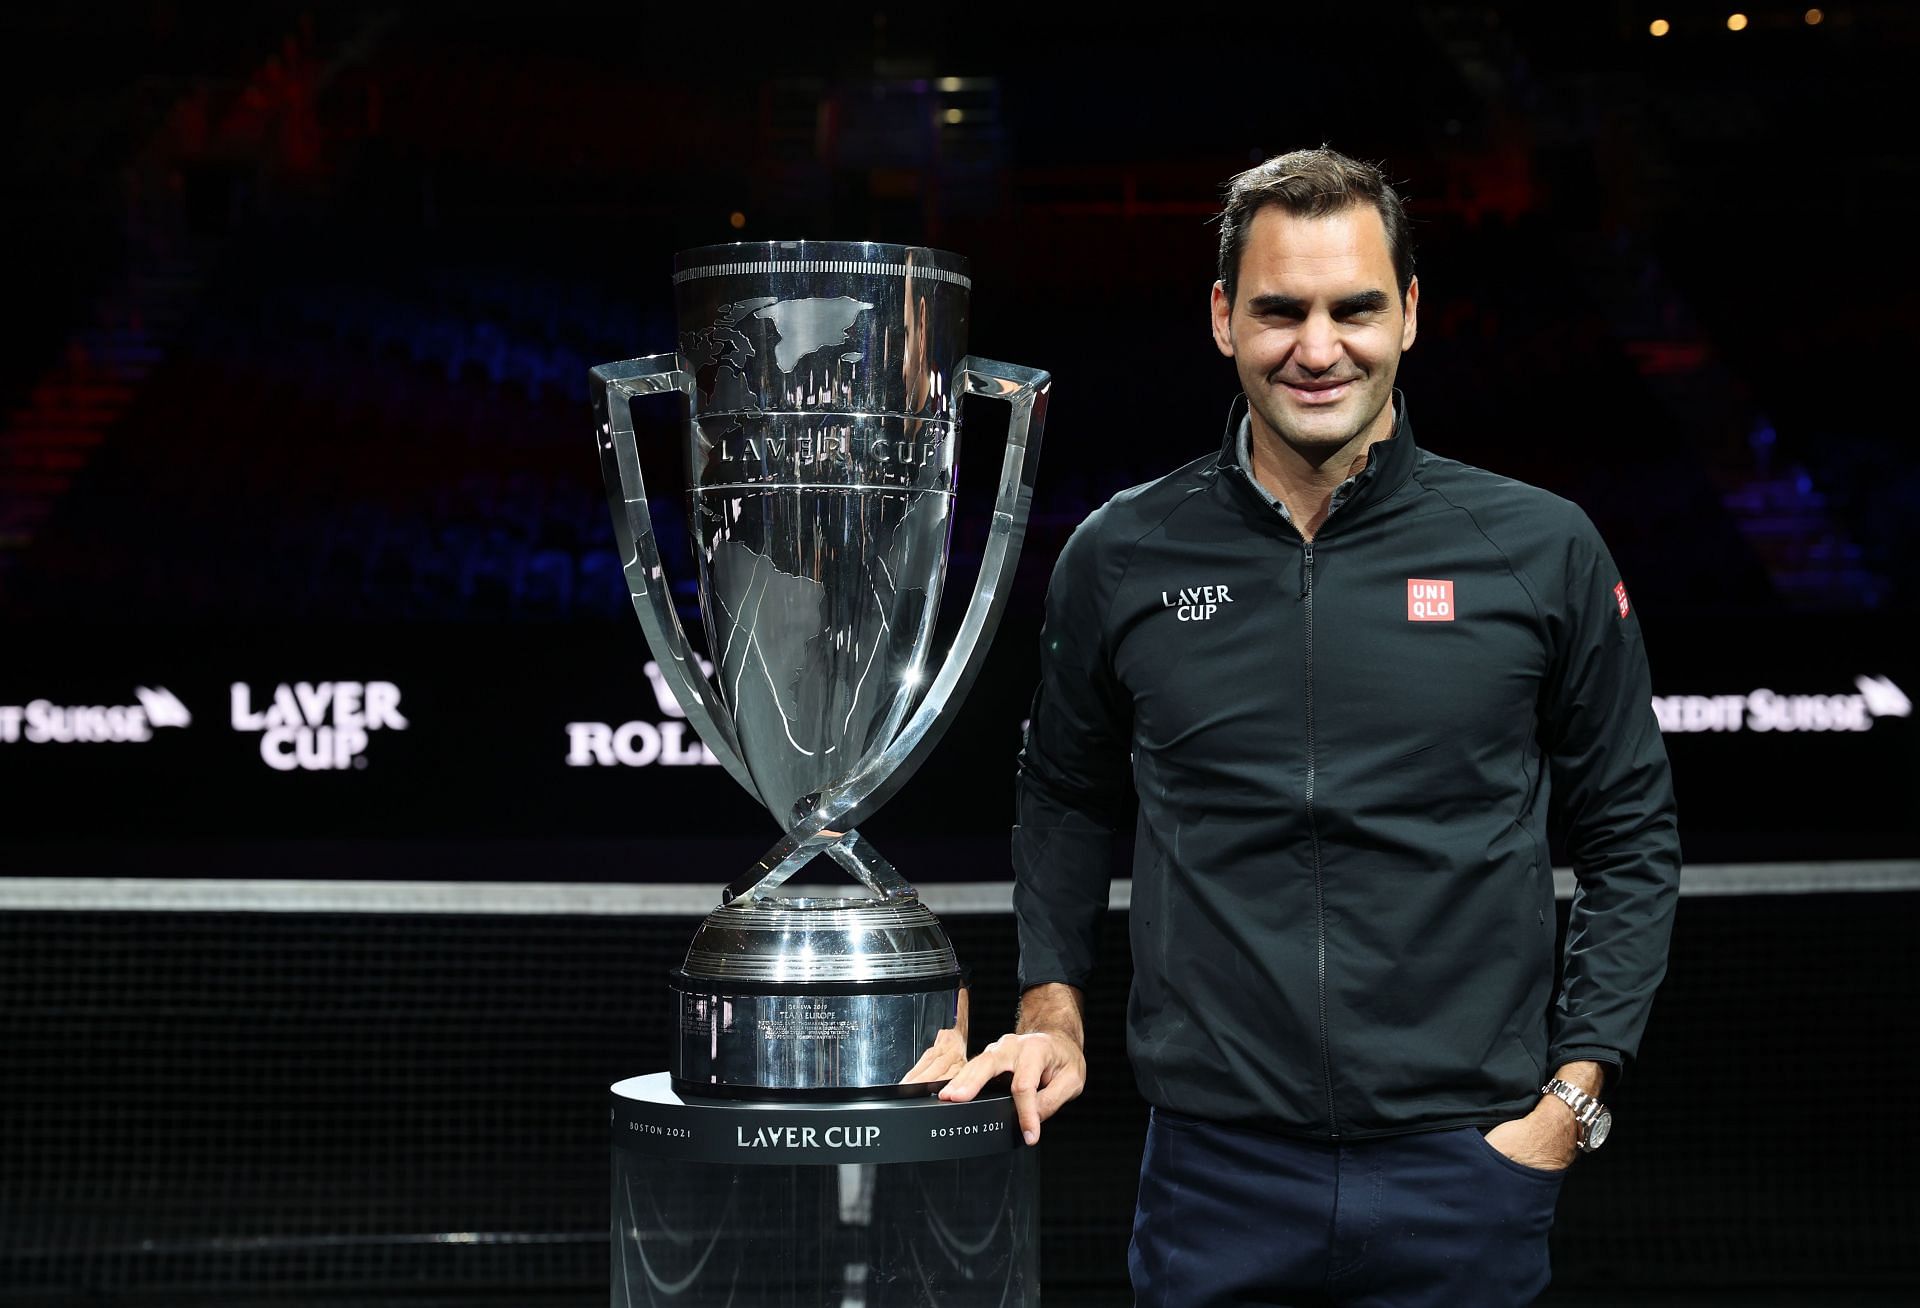 Roger Federer has six season-ending championships